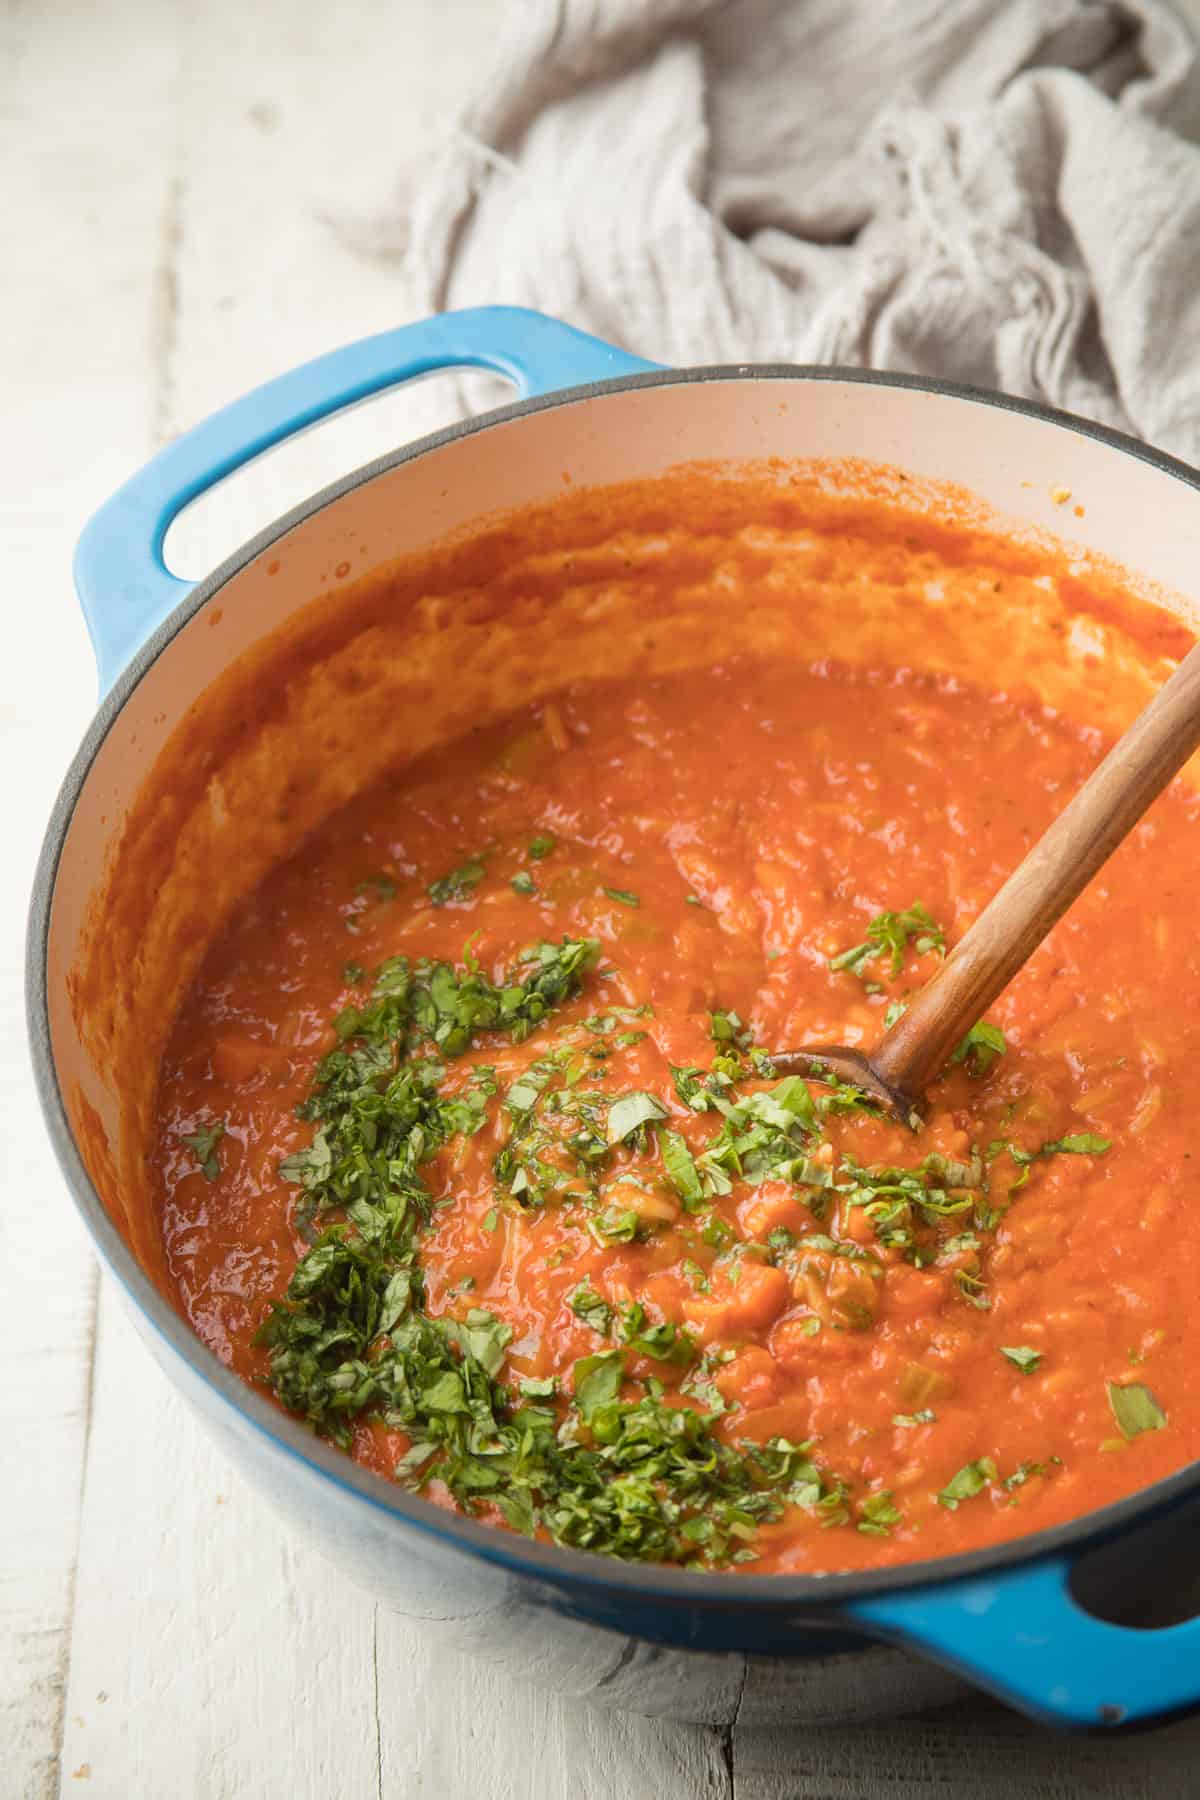 Spoon stirring basil into a pot of Tomato Orzo Soup.